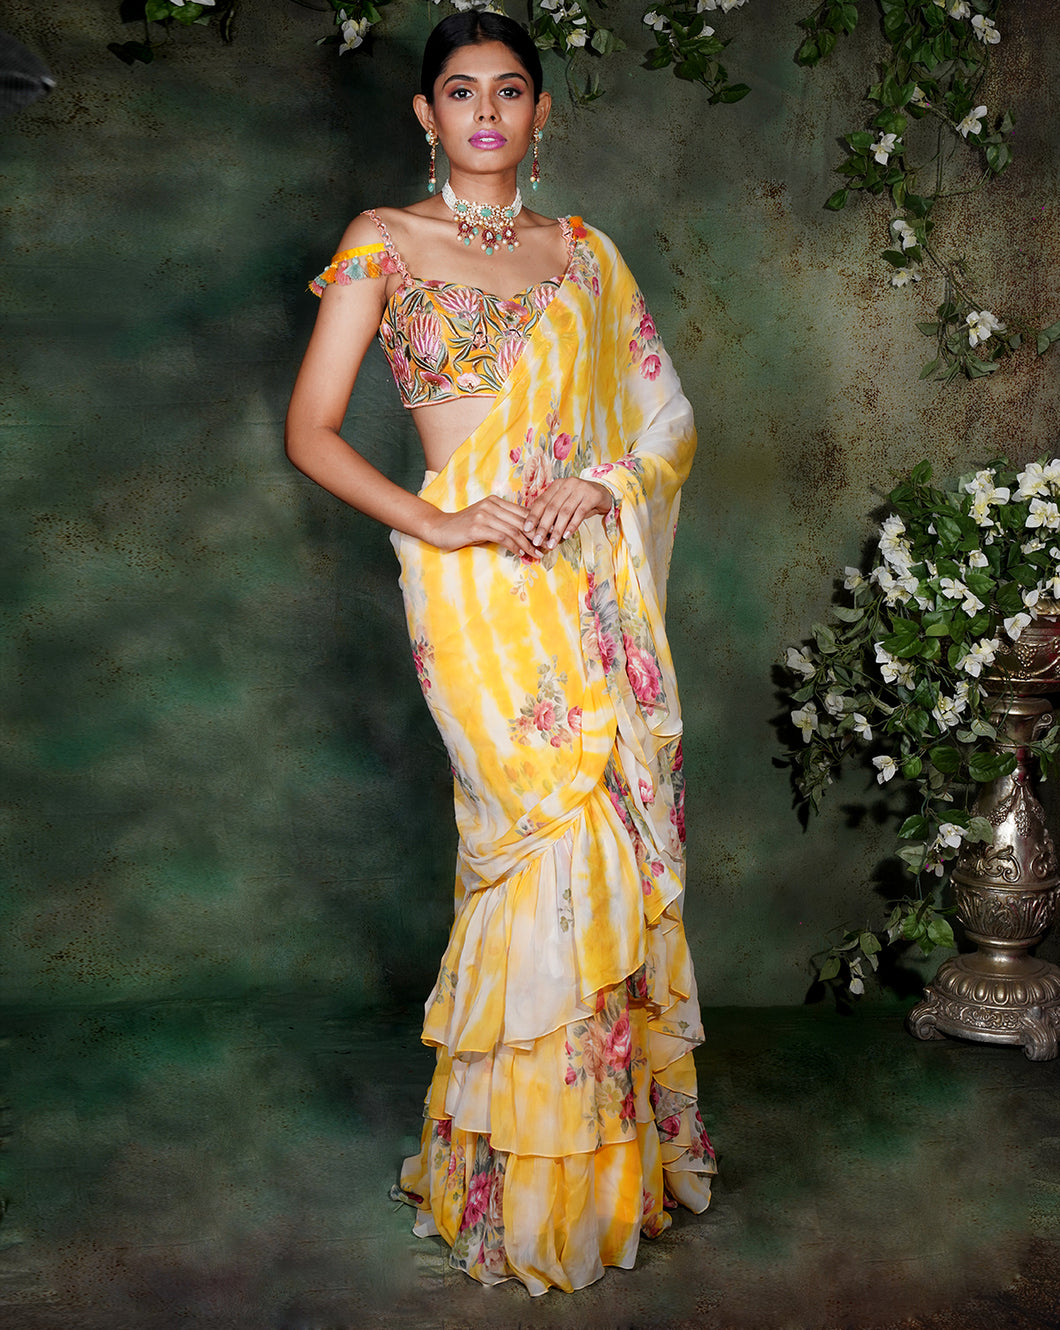 The Yellow Floral Ruffle Sari